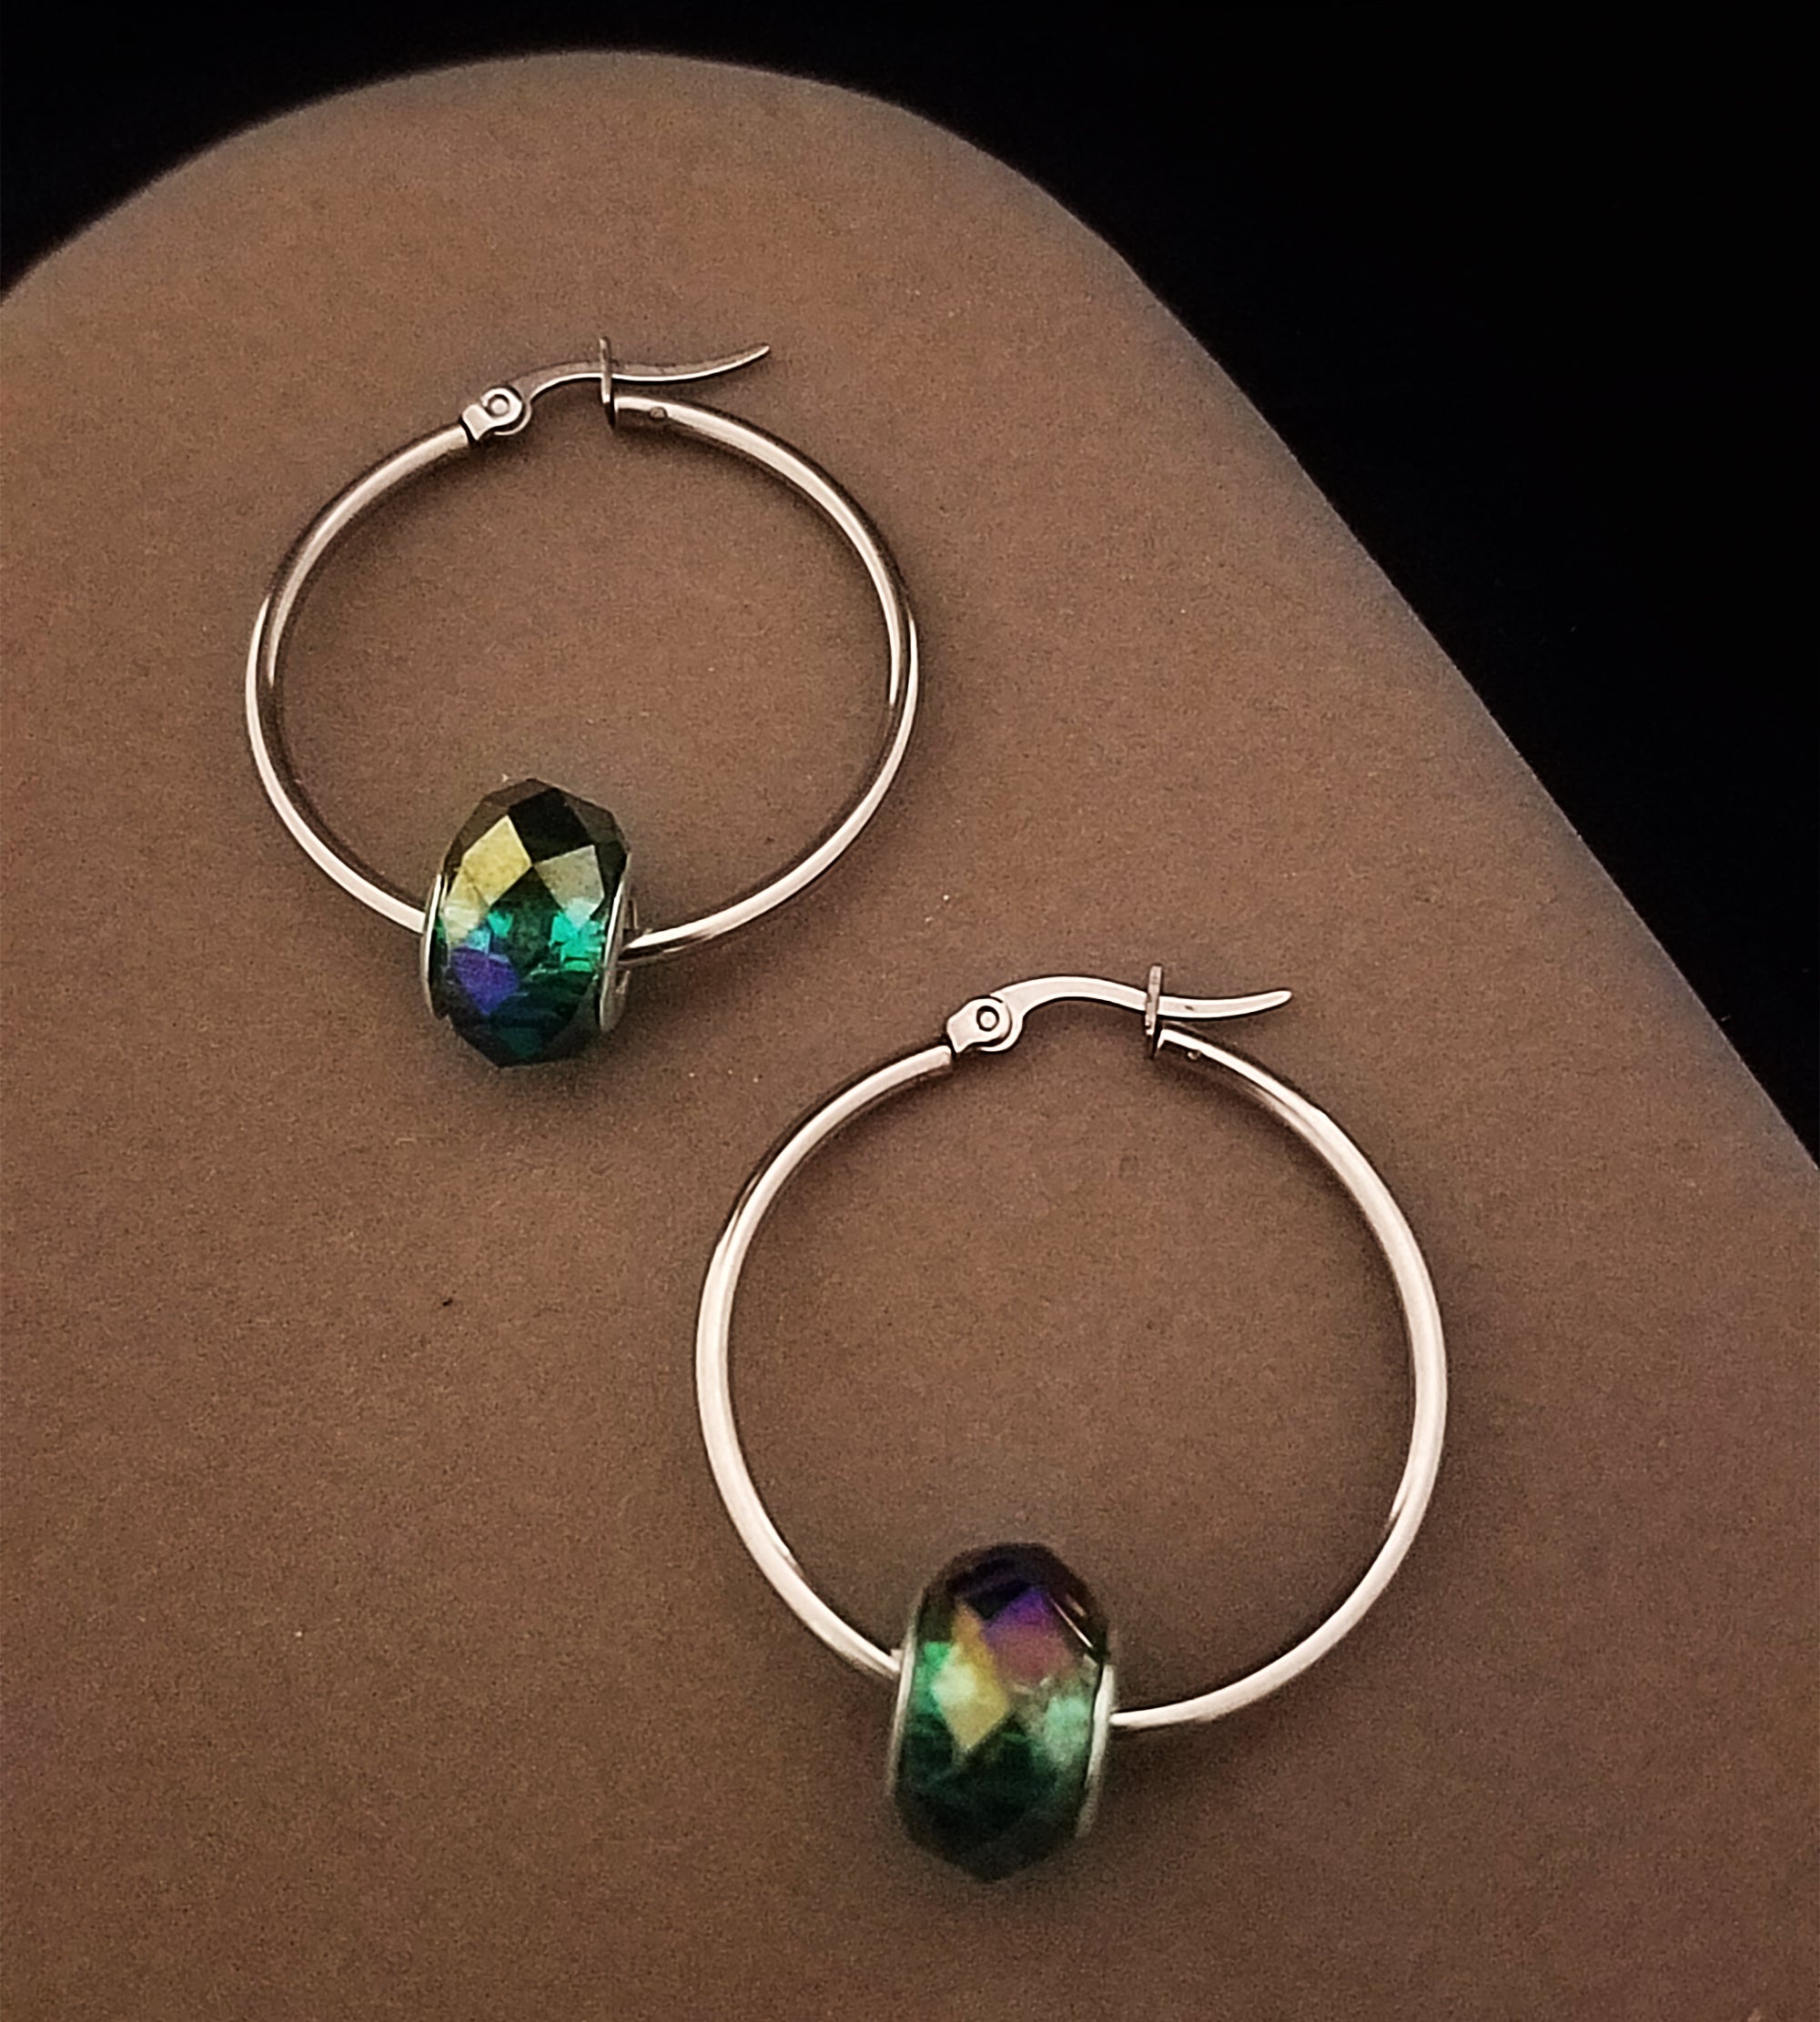 Stainless Steel necklace and hoop earrings set - SN034